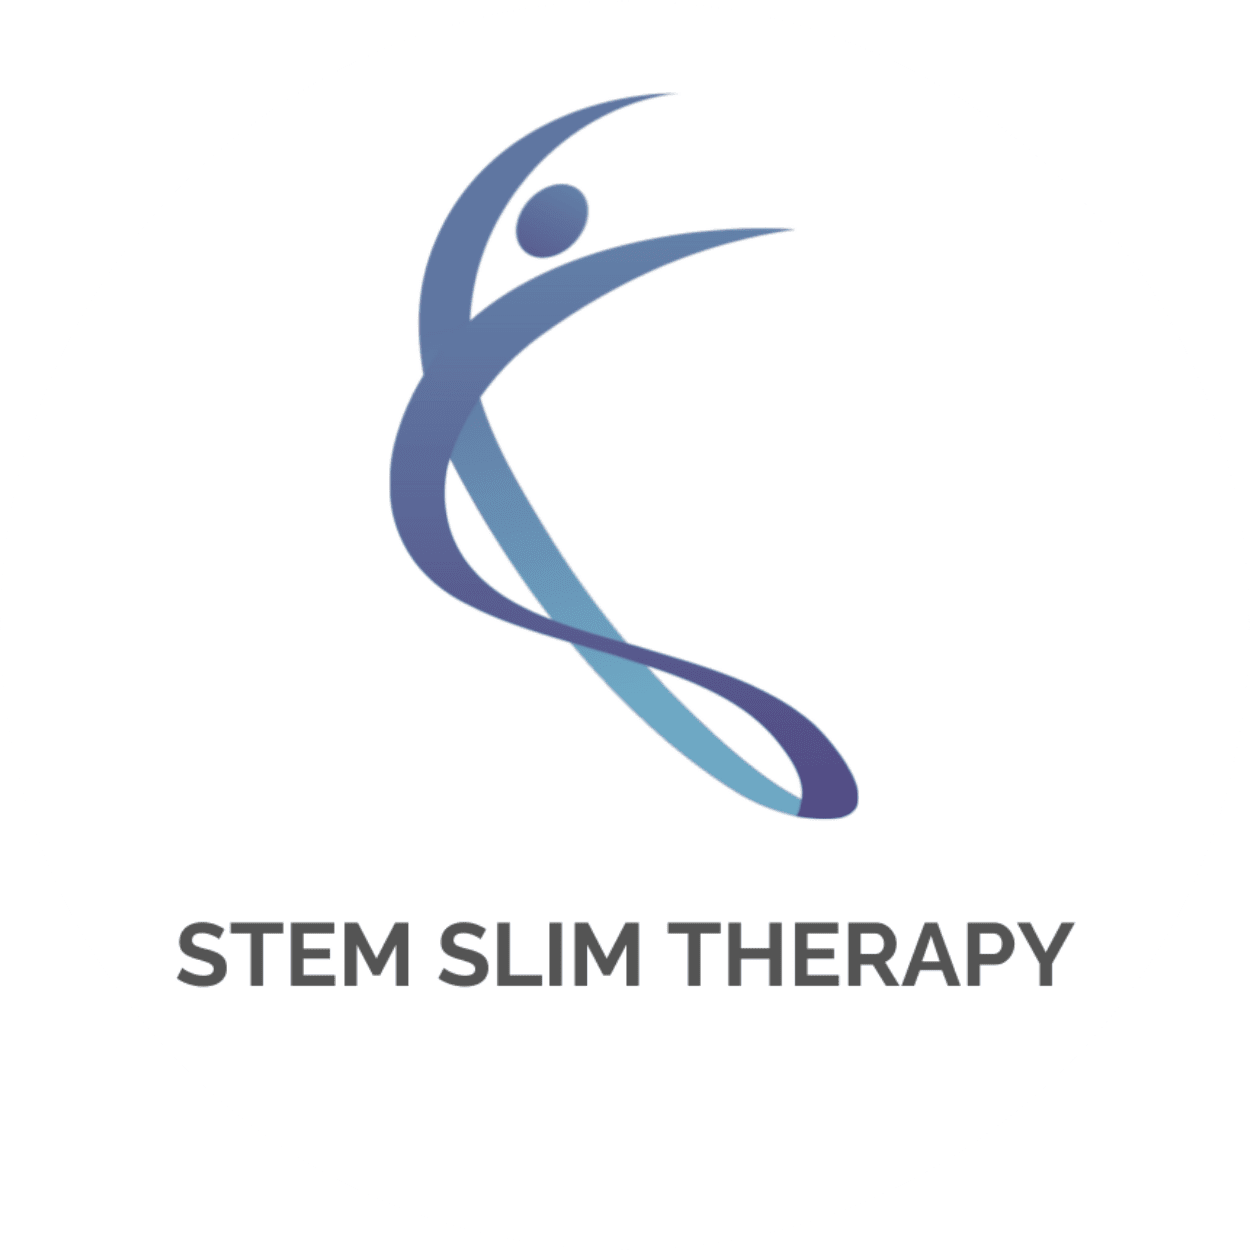 Stem Slim Therapy